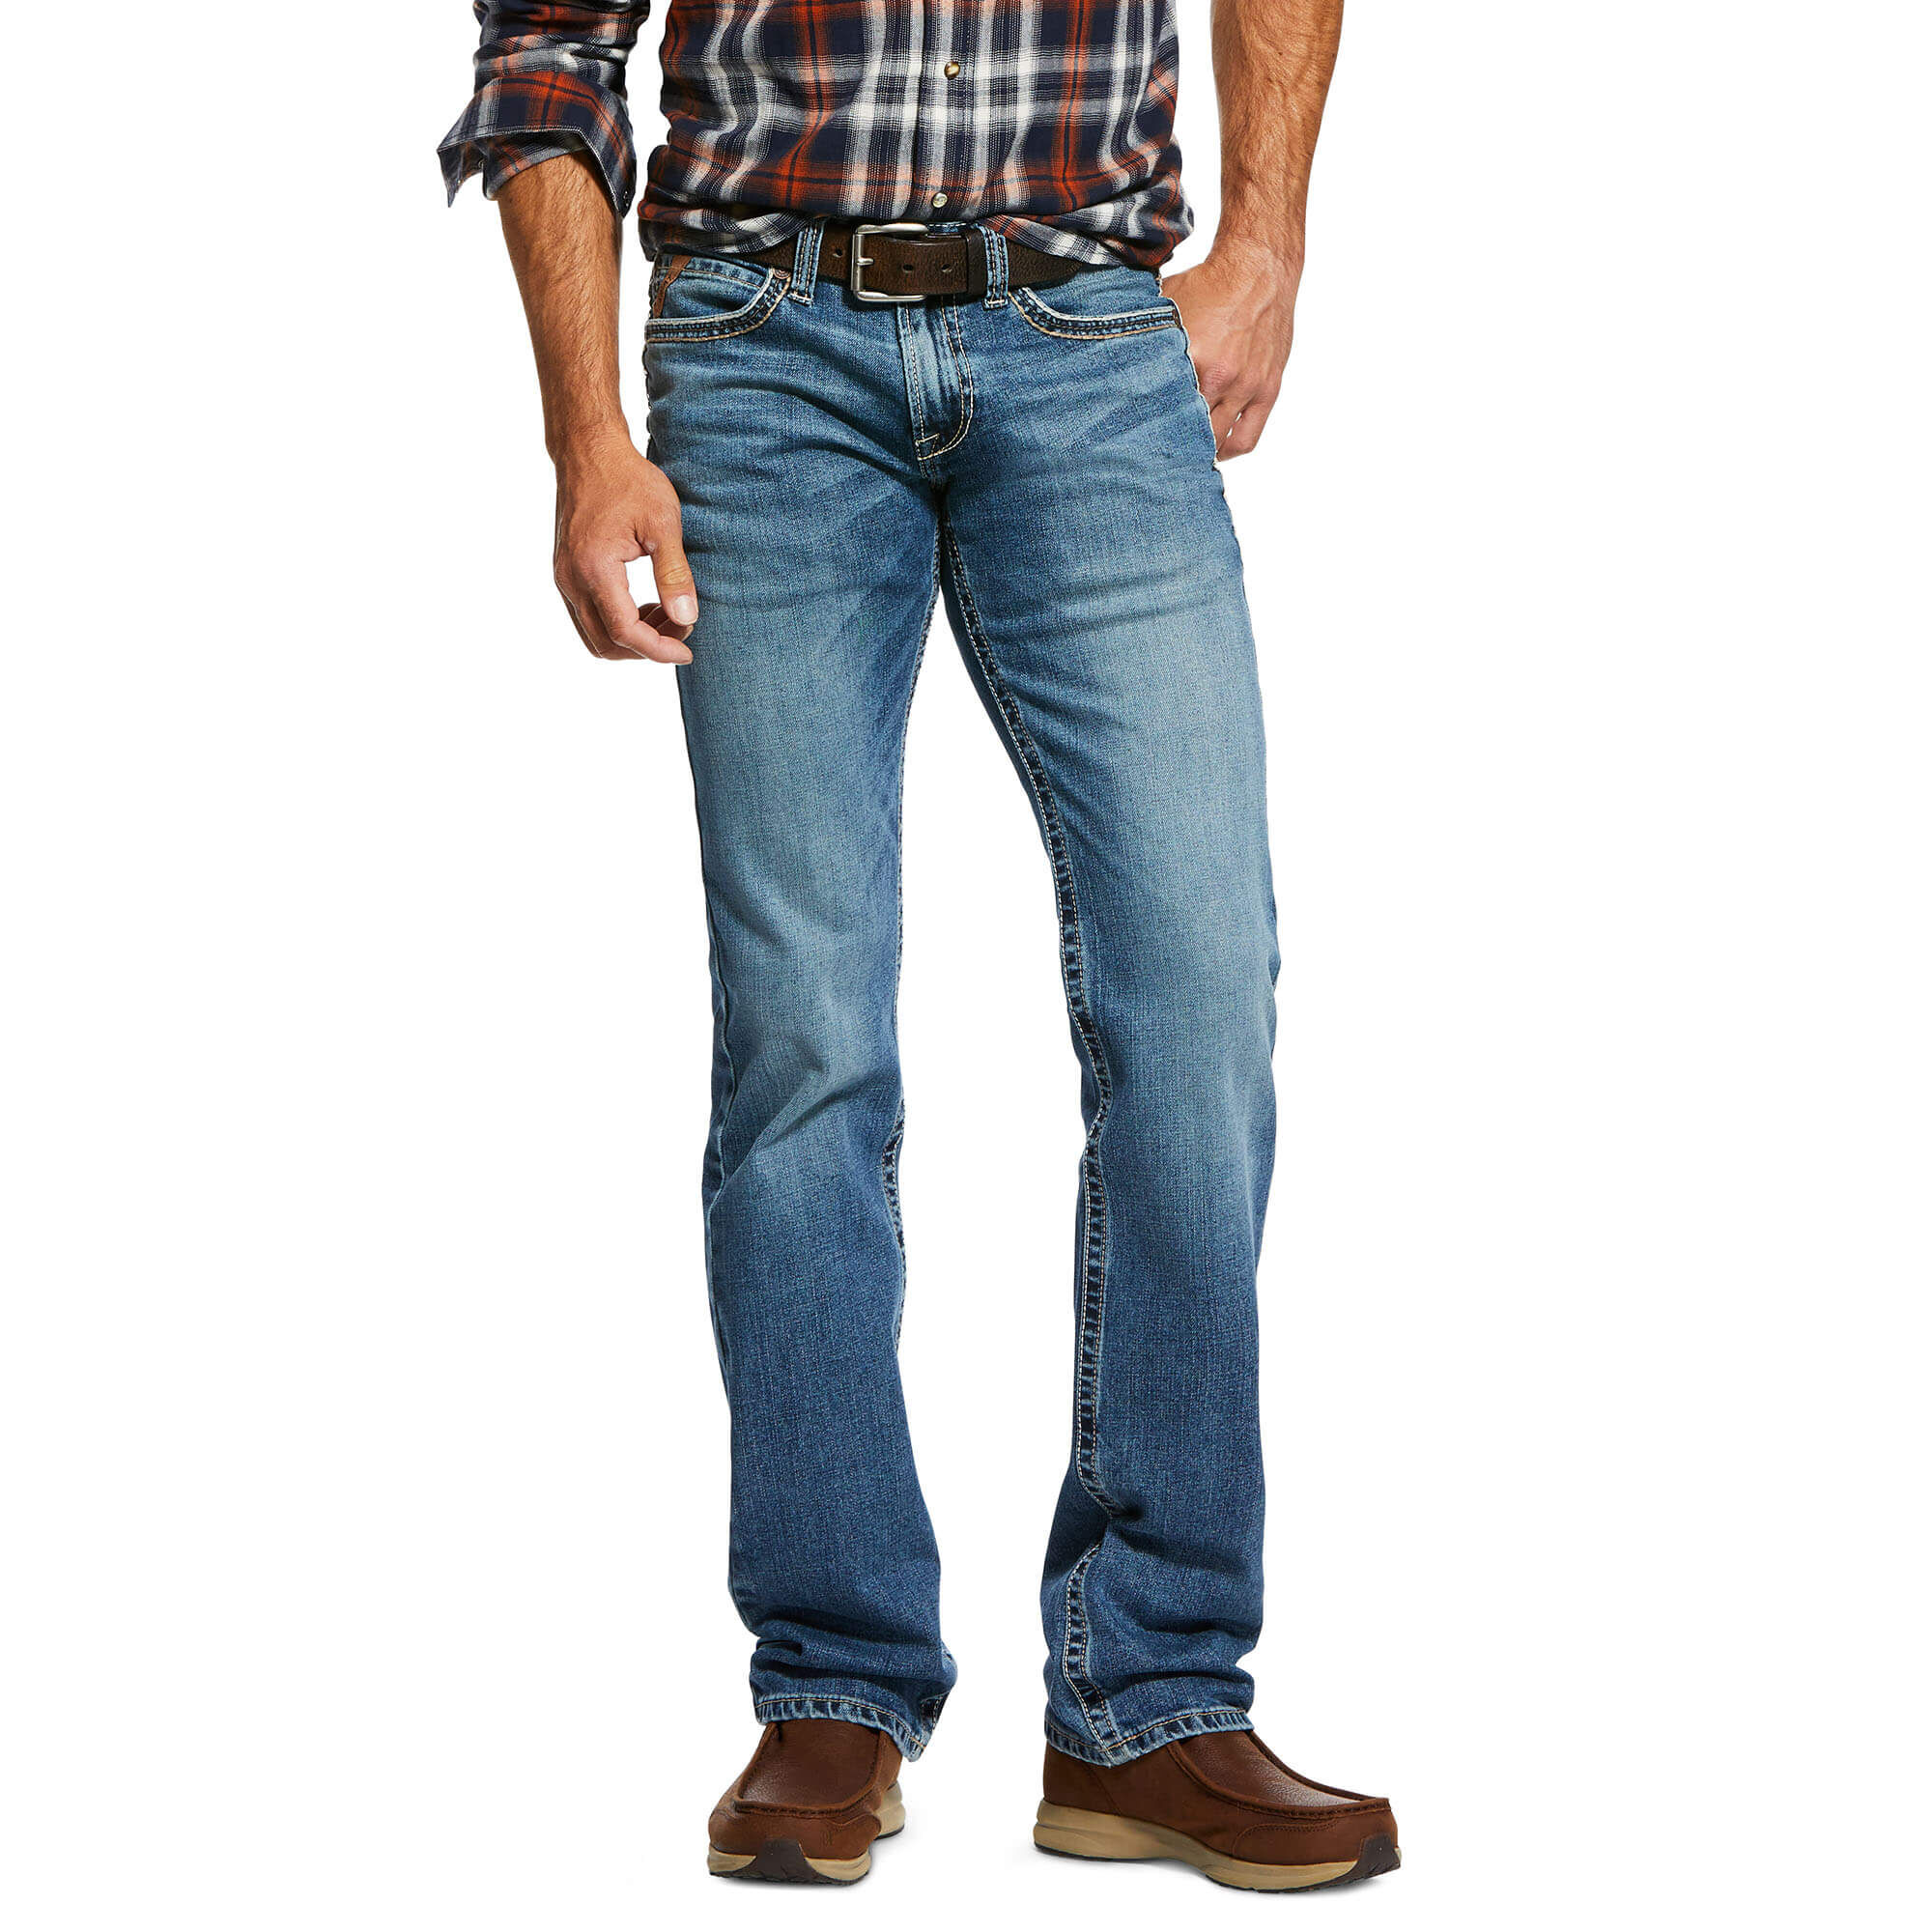 western jeans for men